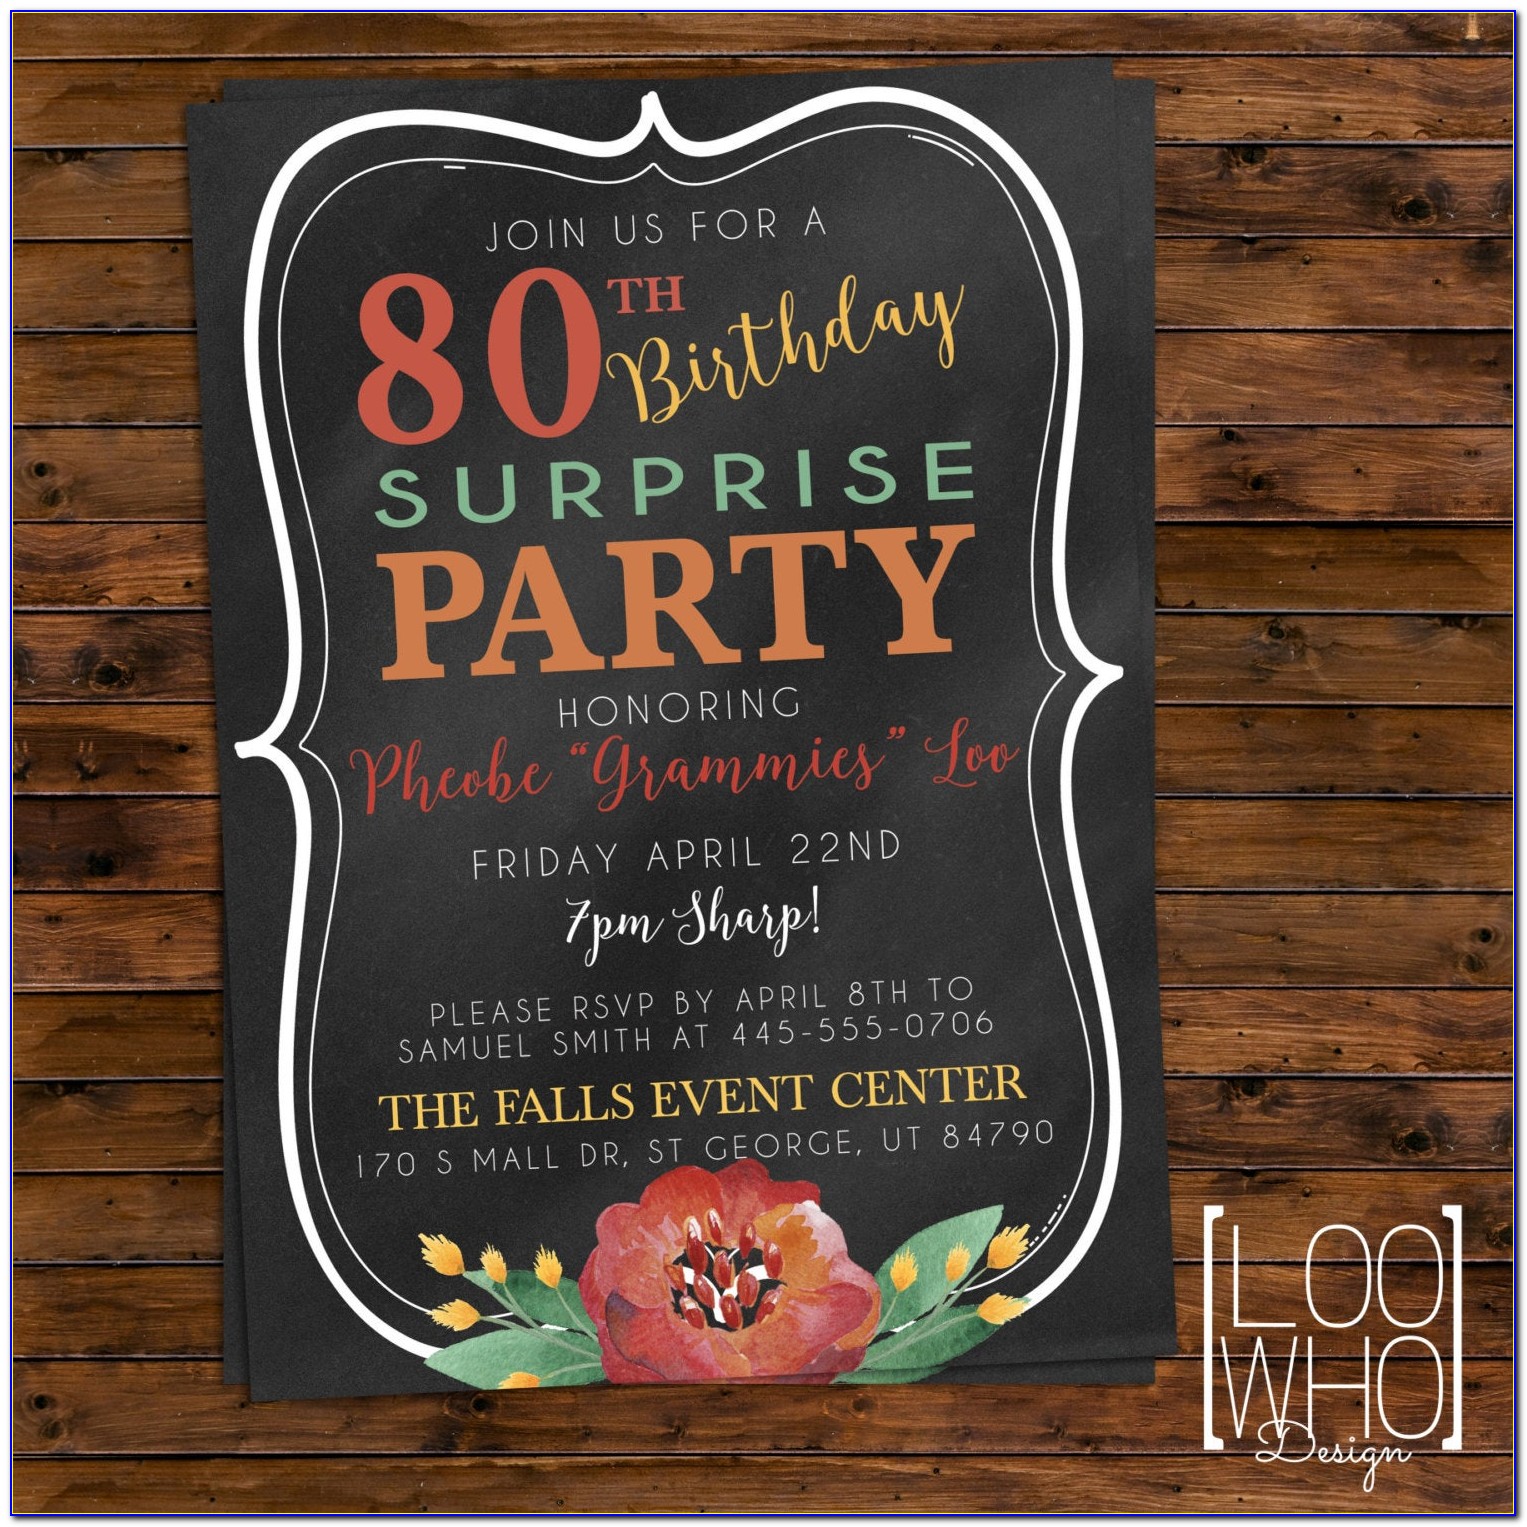 Surprise 80th Birthday Party Invitation Wording